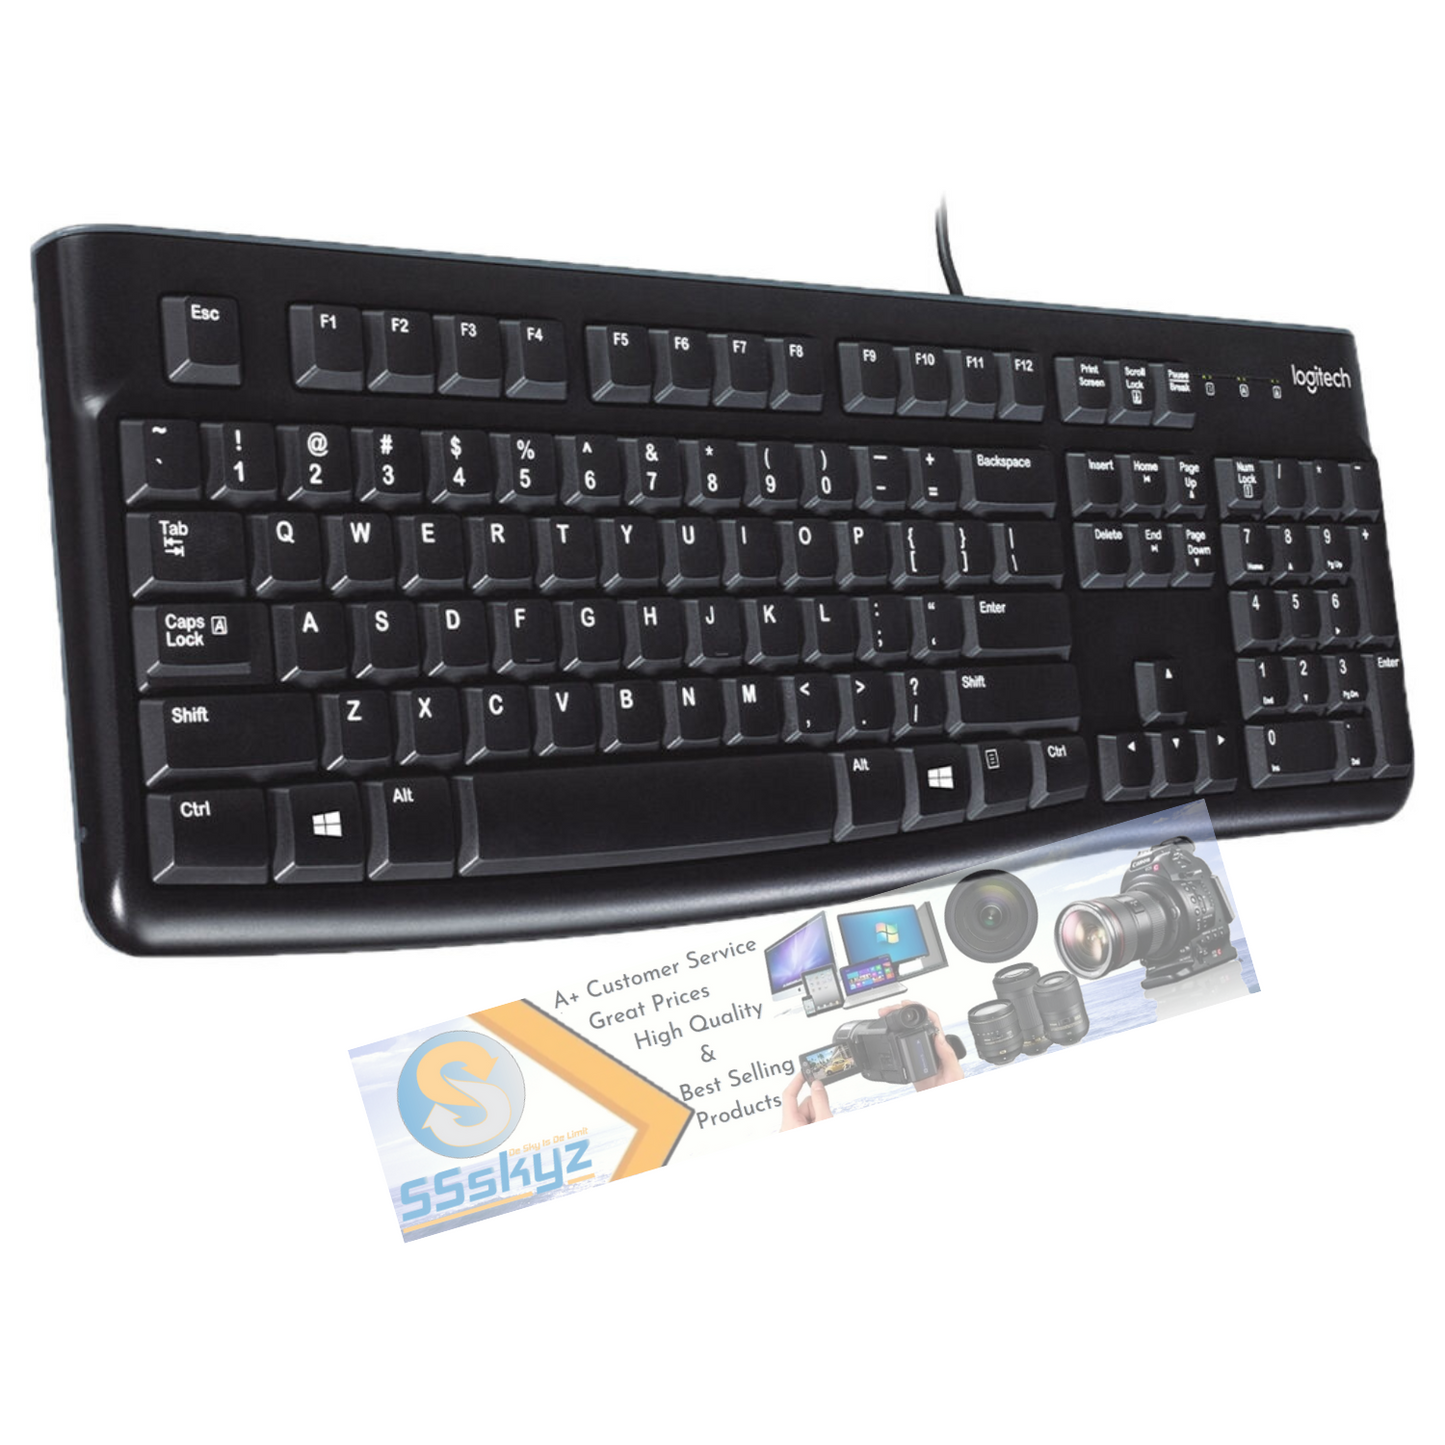 Logitech K120 USB Keyboard for PC - Black